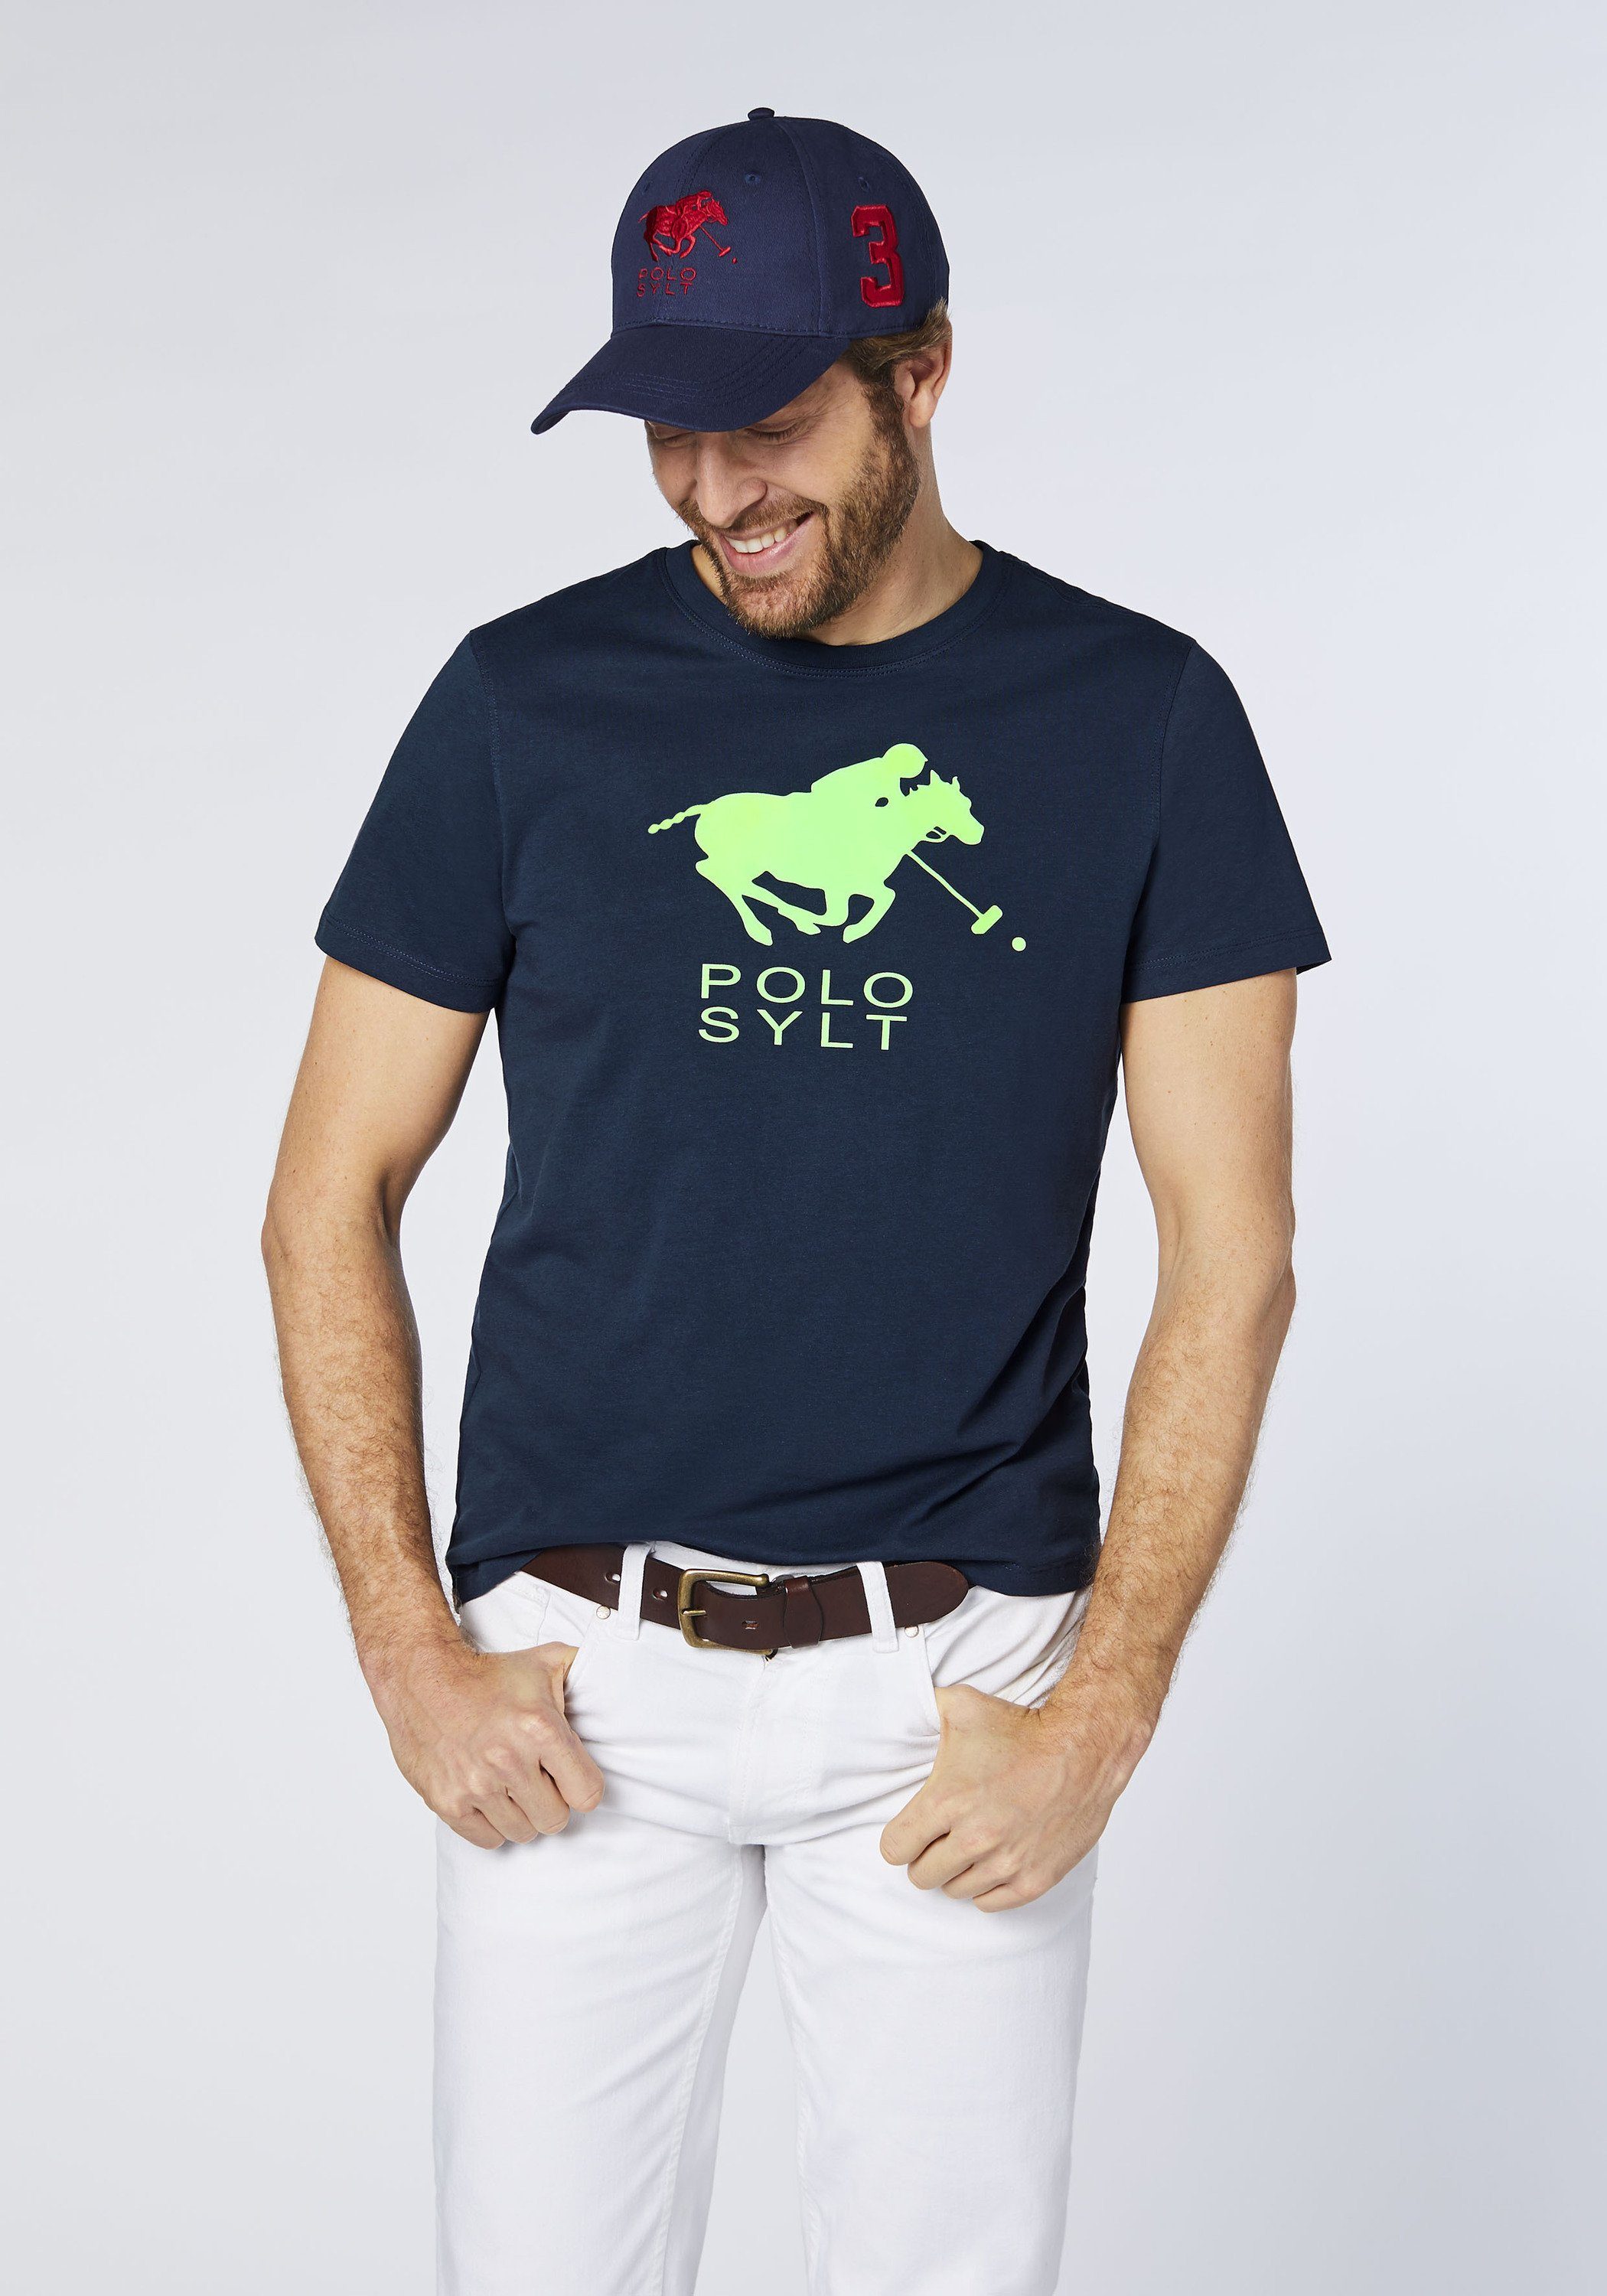 Print-Shirt Polo Total Sylt Frontprint Logo Neon Eclipse mit